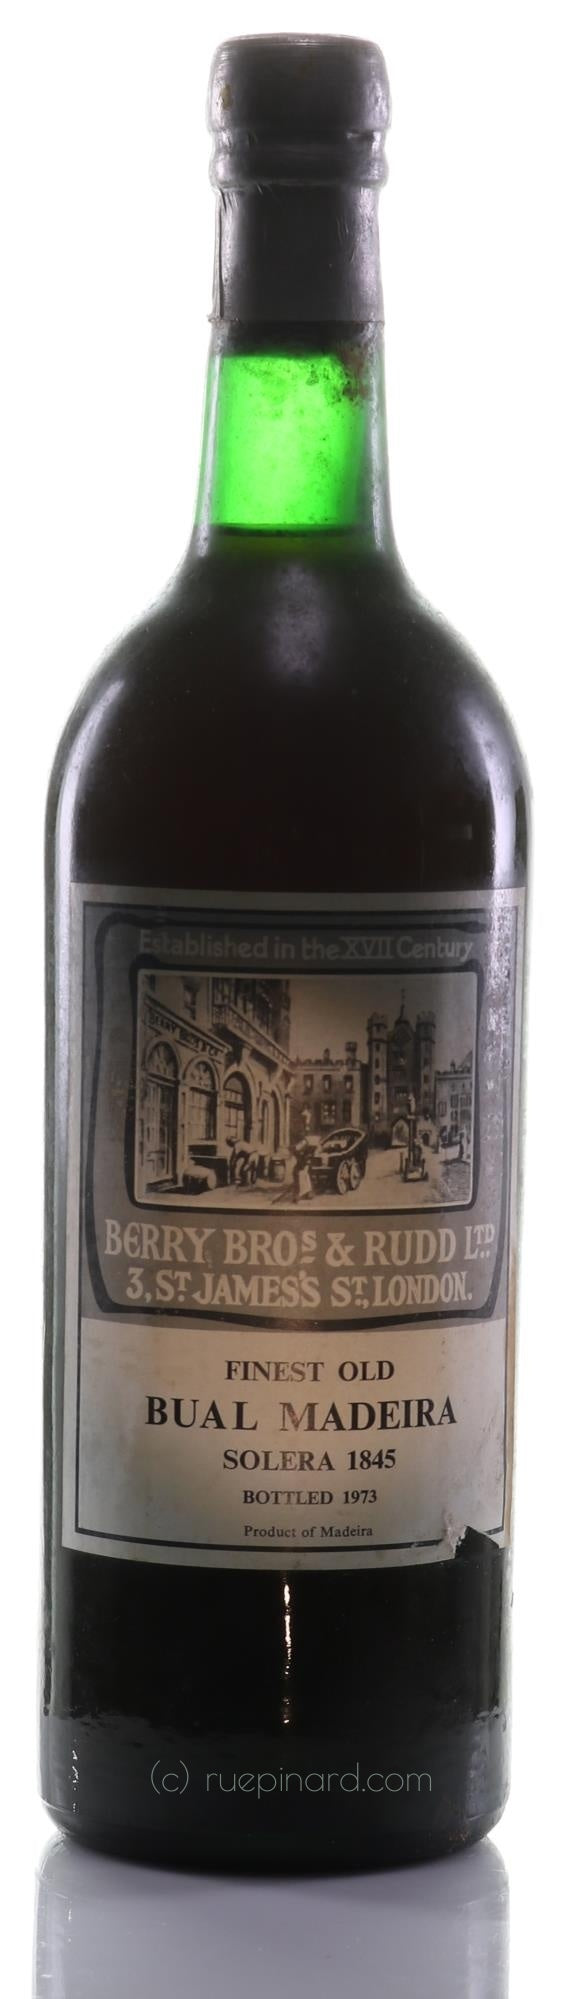 Berry Bros. & Rudd Old Bual Solera Madeira 1973 - Rare Vintage 1845 - Rue Pinard